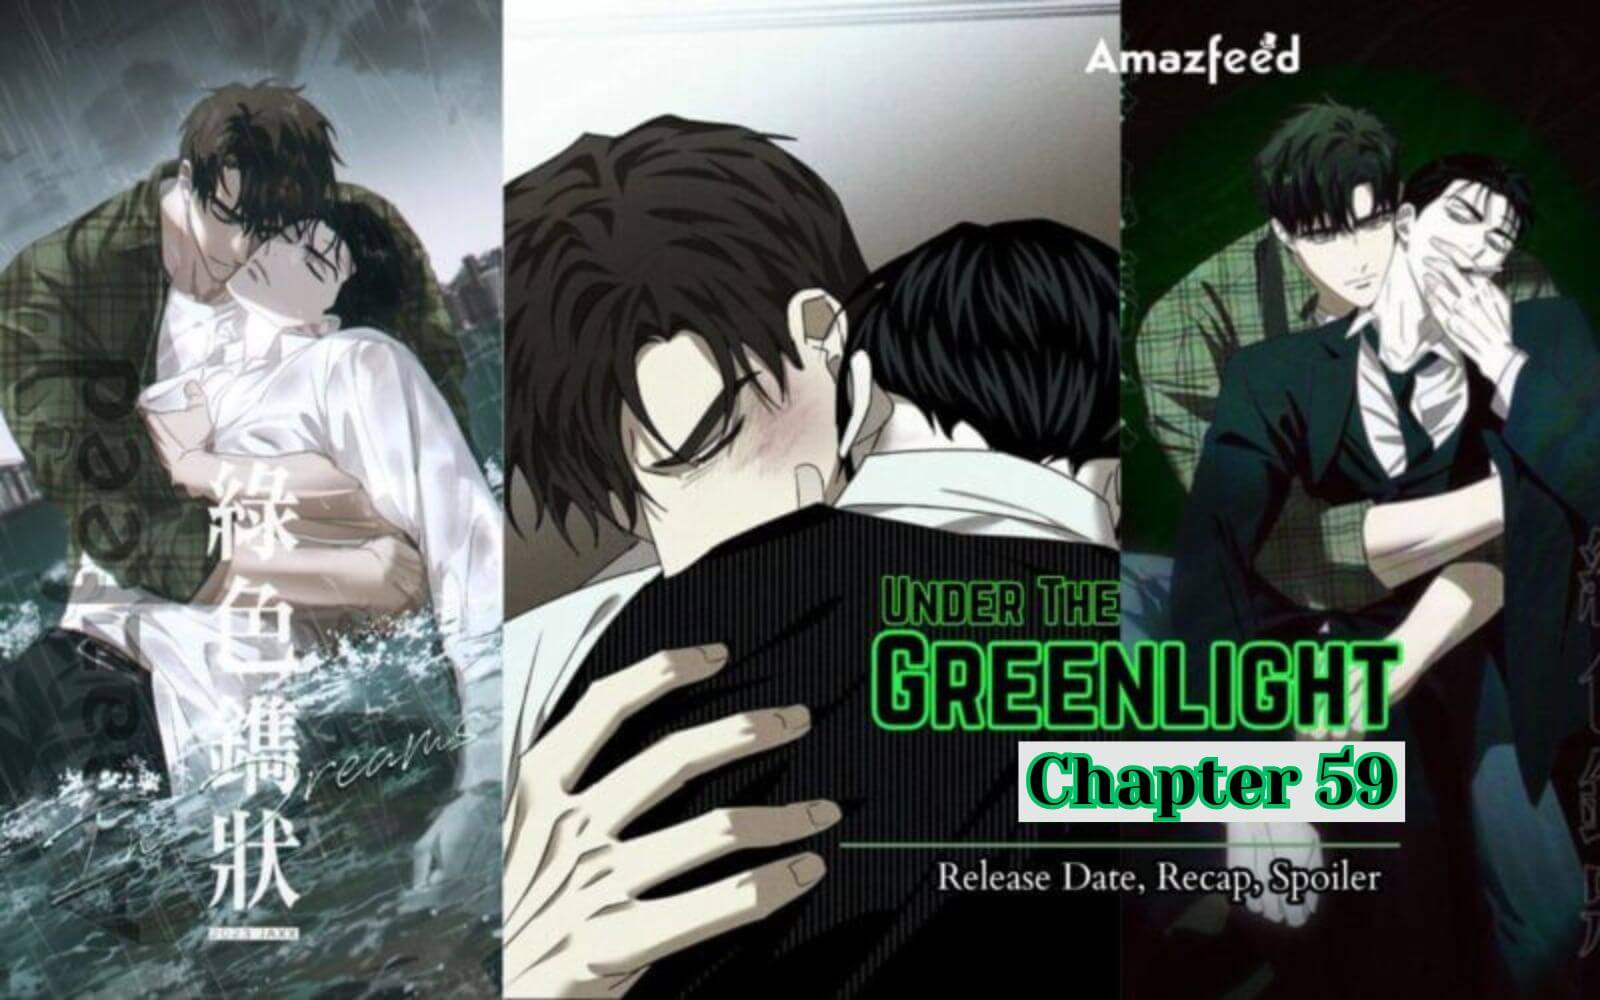 Under The Greenlight Chapter 59 spoiler